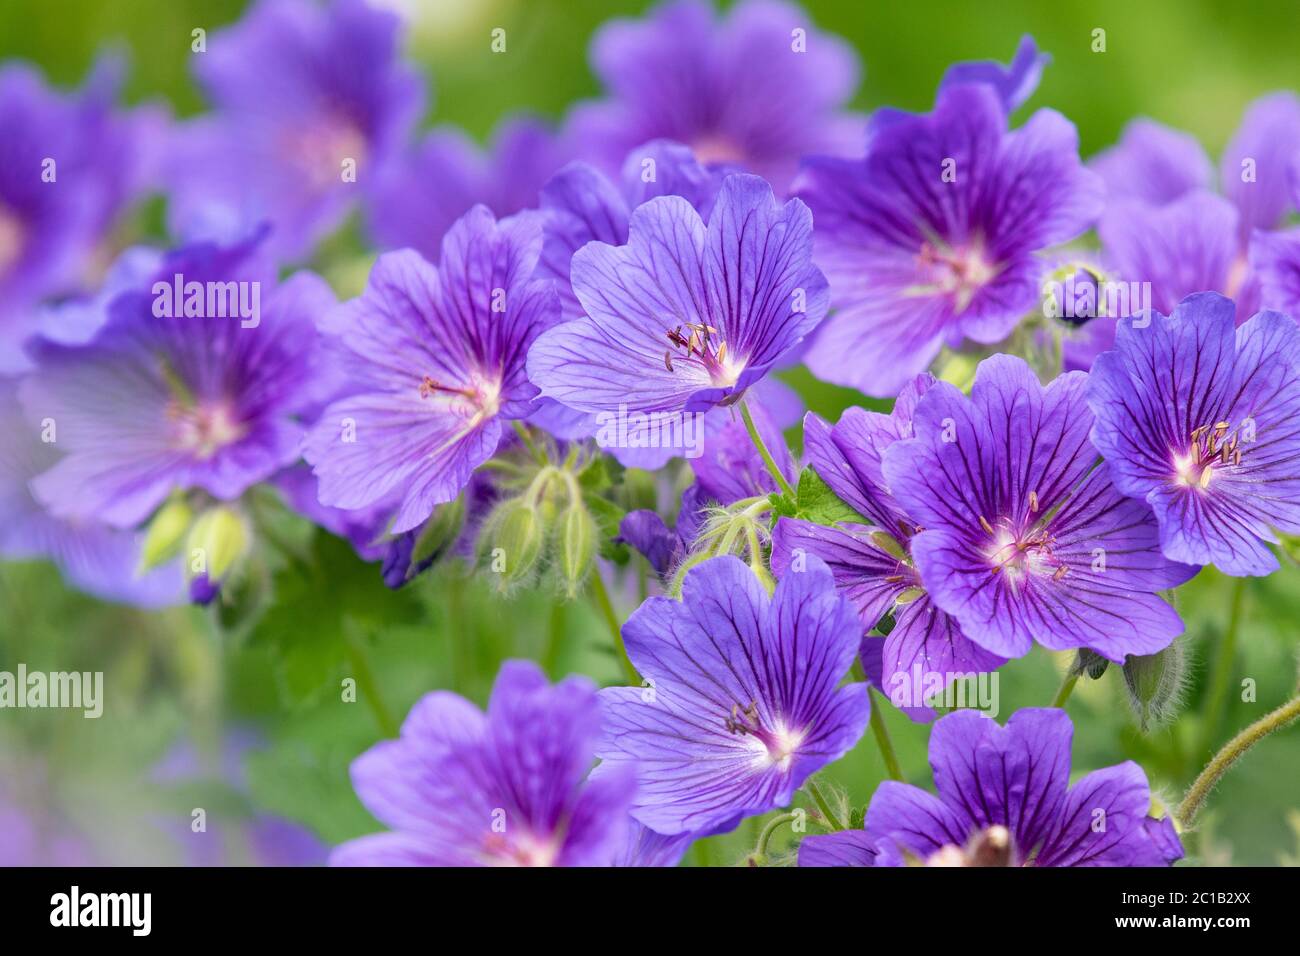 Hardy geranium x magnificum or purple cranesbill - UK Stock Photo